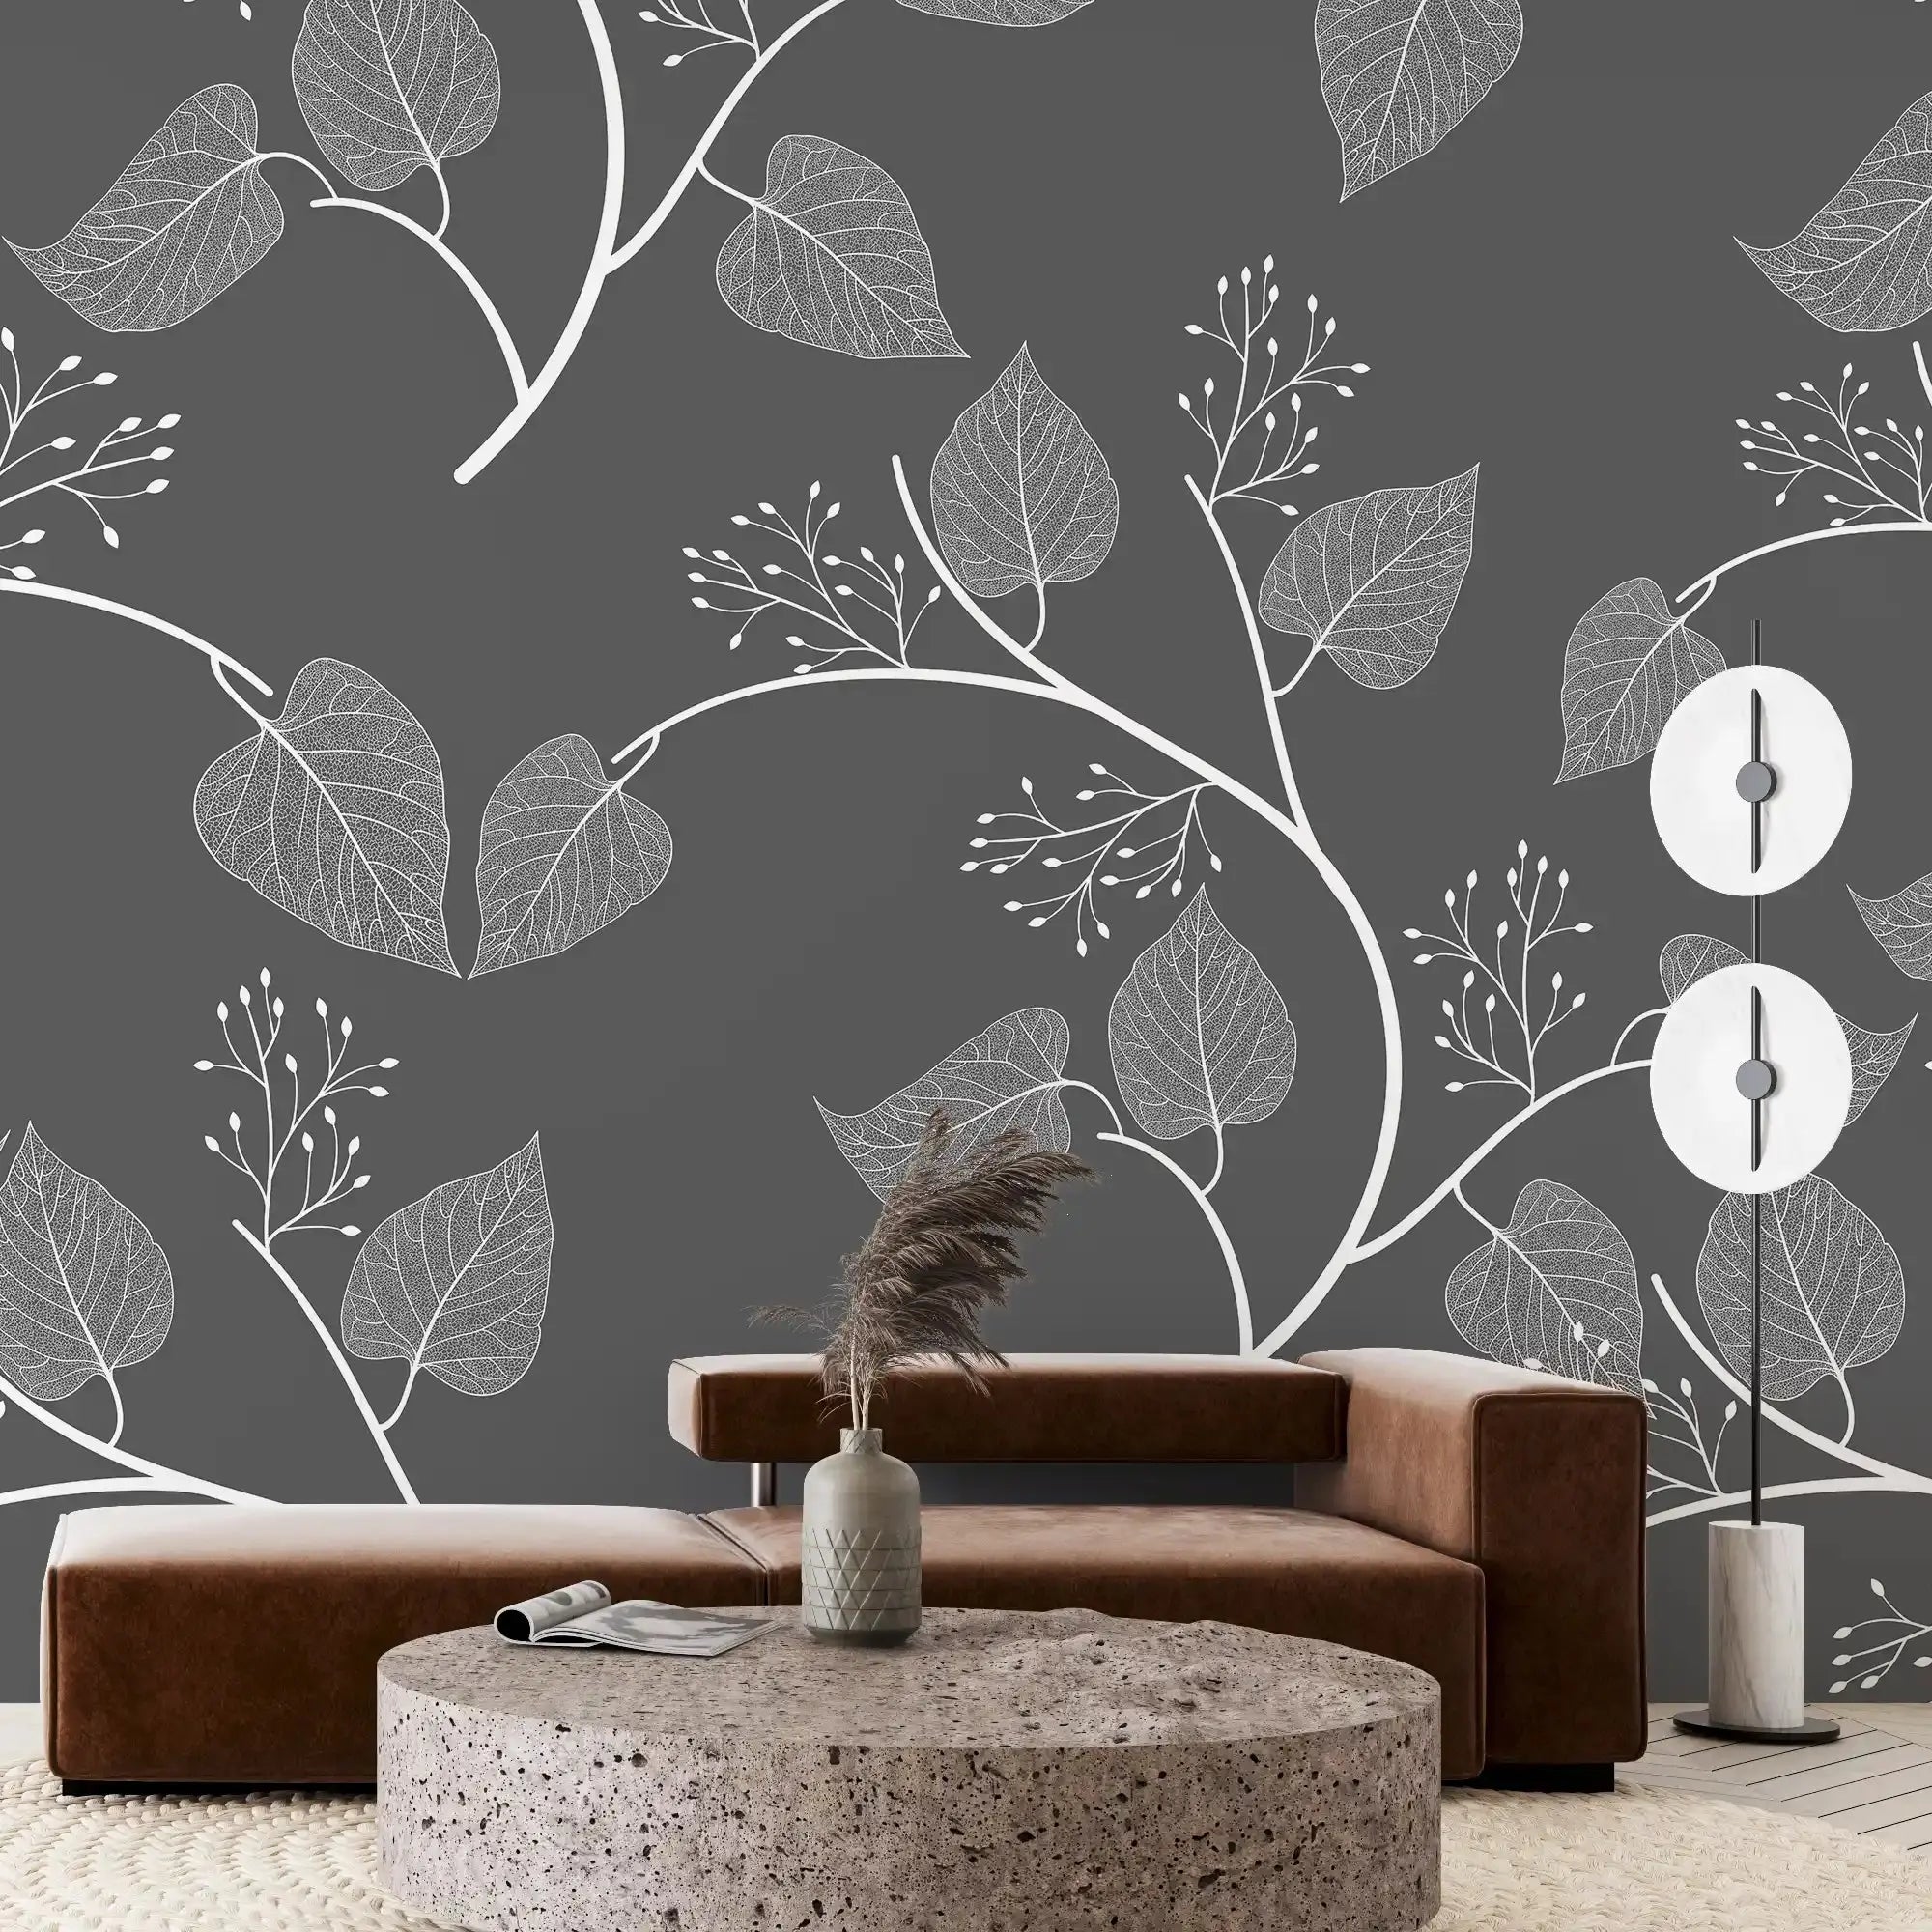 3104-A / Floral Peel and Stick Wallpaper, Botanical Leaf Design Wall Mural - Artevella